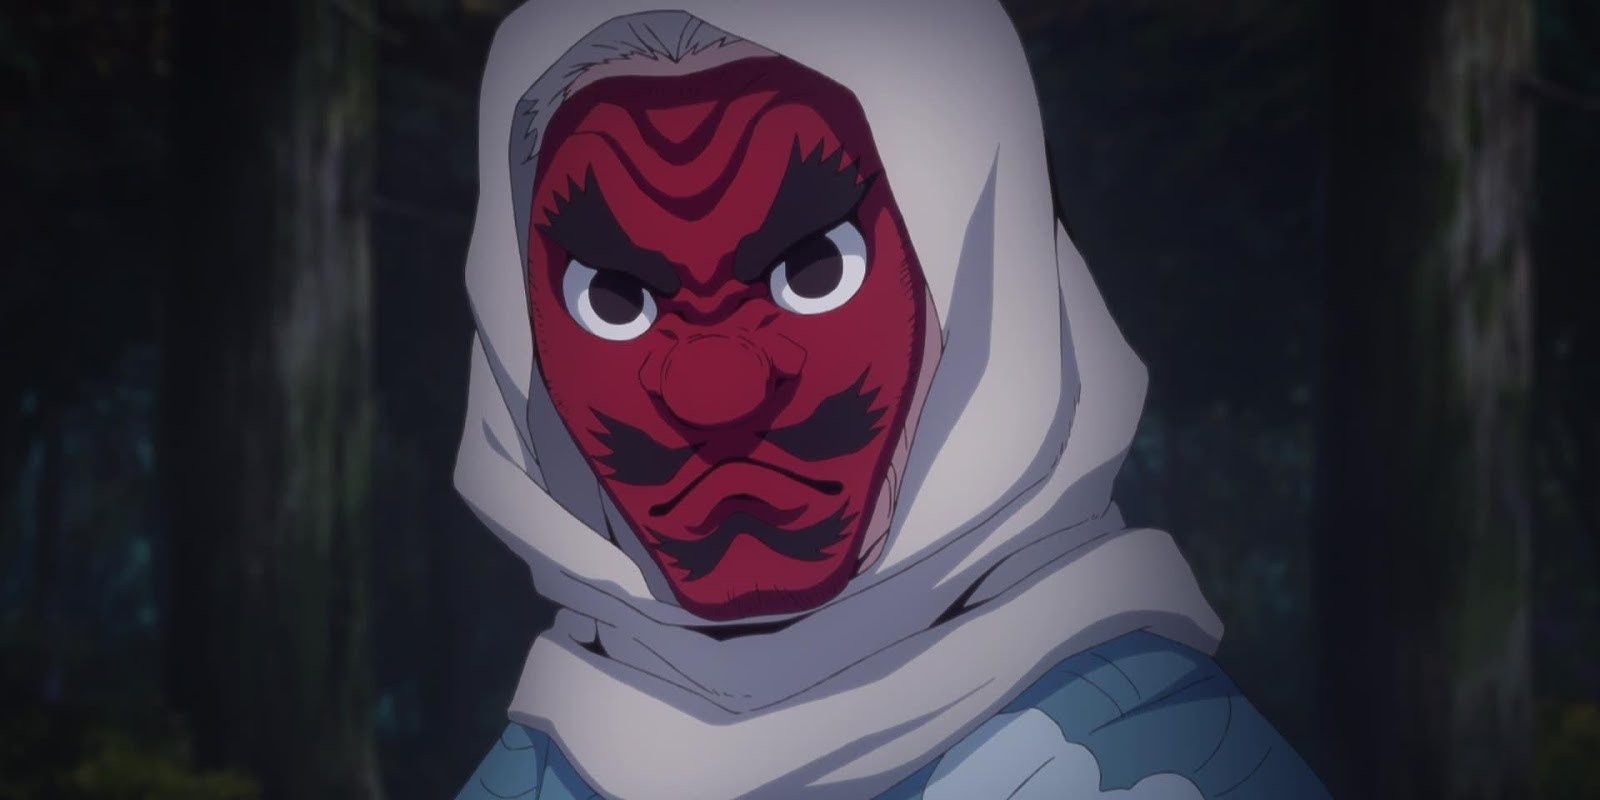 Sakonji from Demon Slayer wearing a scowling mask.